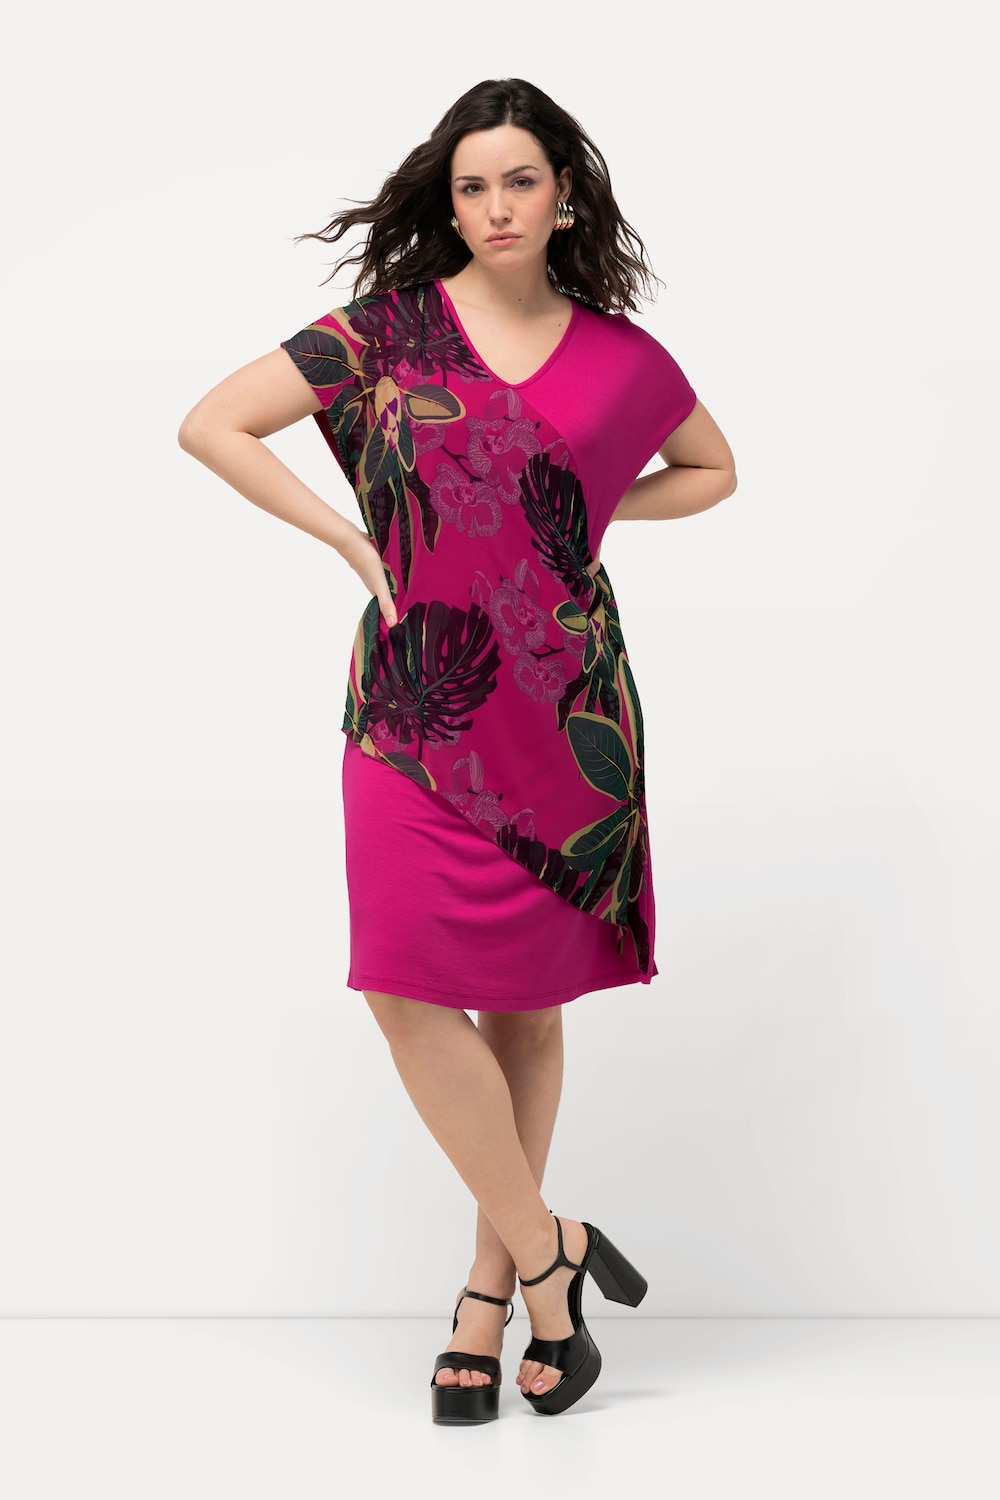 Grote Maten Jersey jurk, Dames, roze, Maat: 50/52, Polyester/Viscose, Ulla Popken